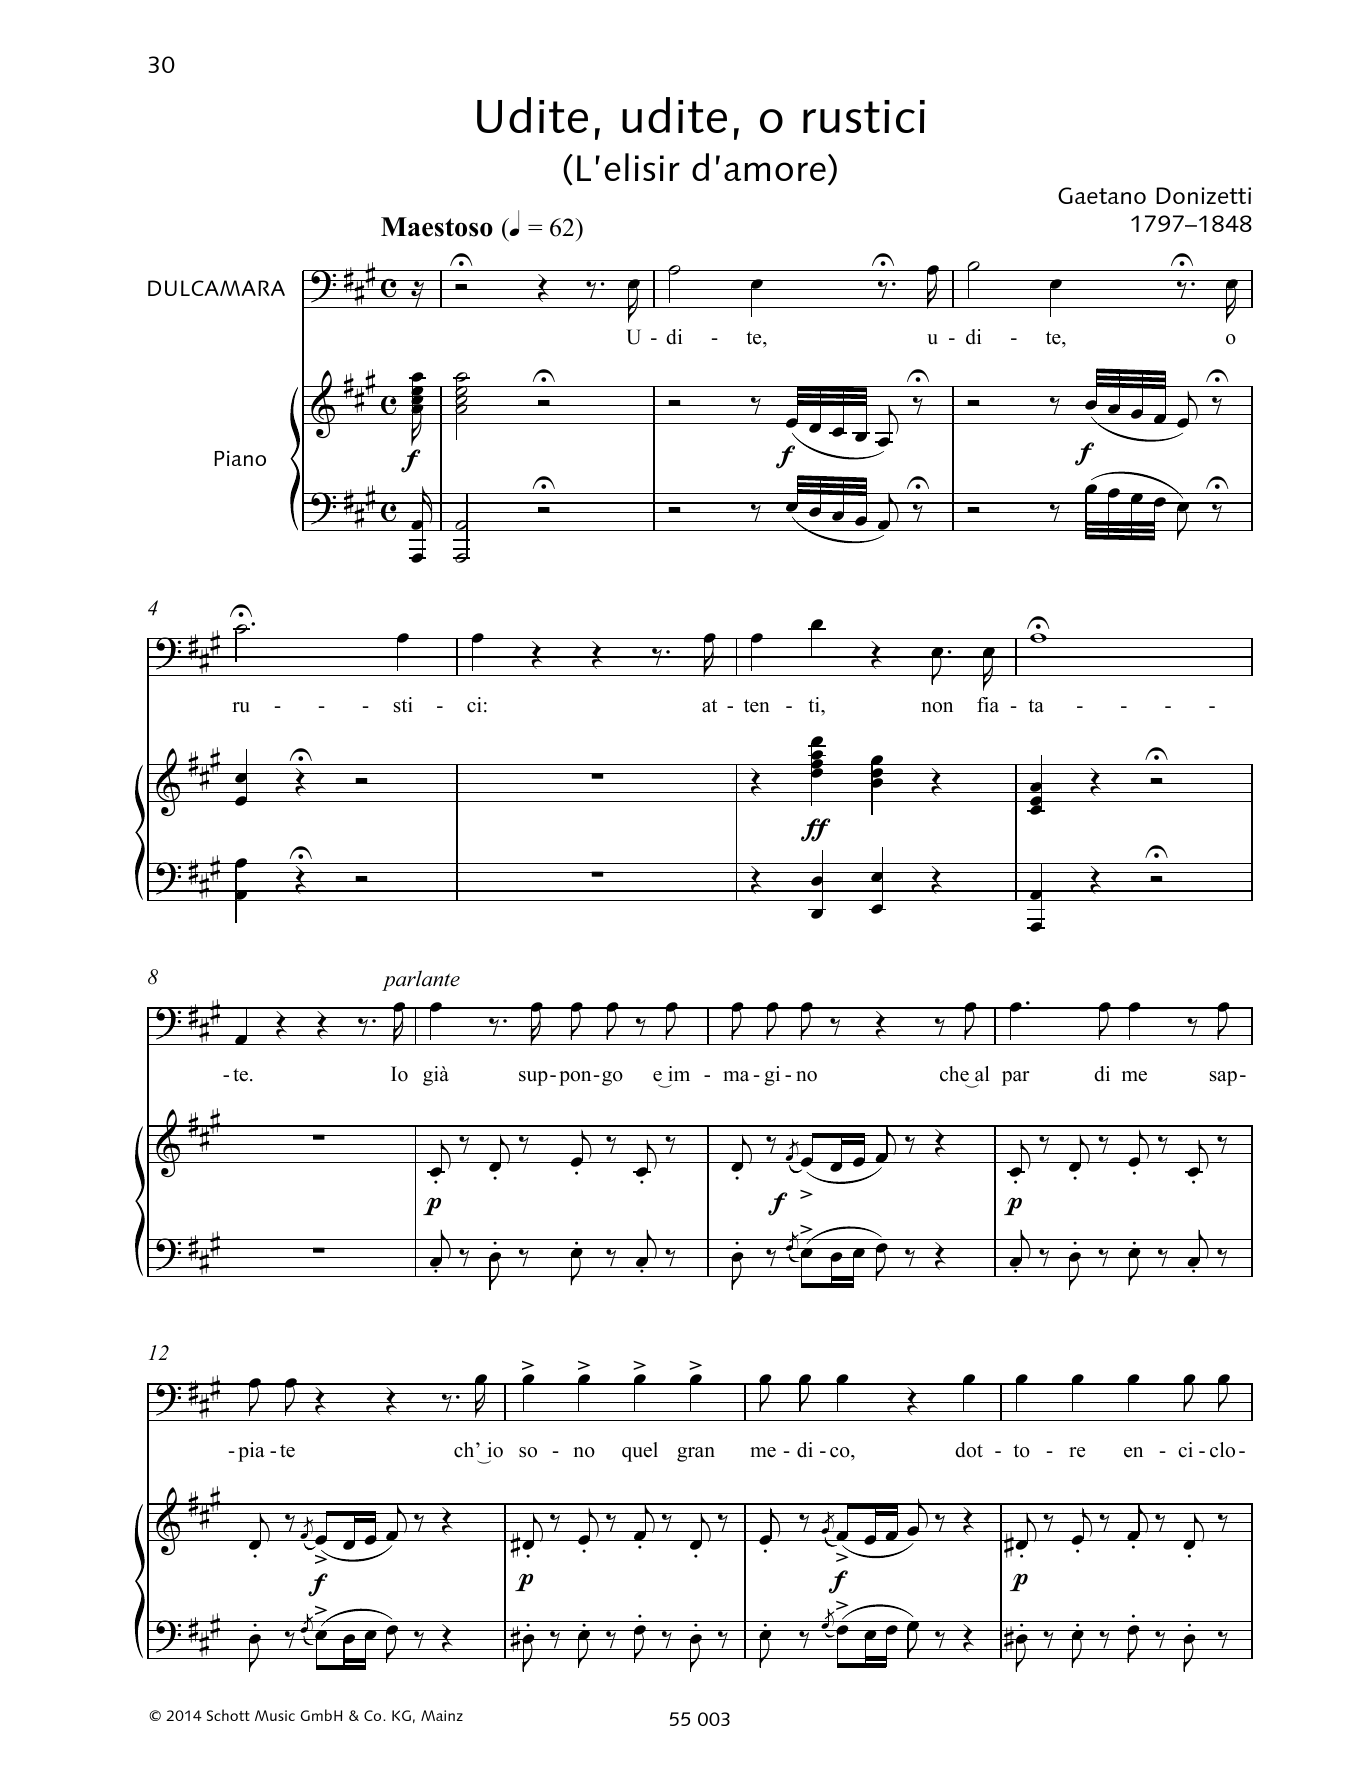 Francesca Licciarda Udite, udite, o rustici Sheet Music Notes & Chords for Piano & Vocal - Download or Print PDF